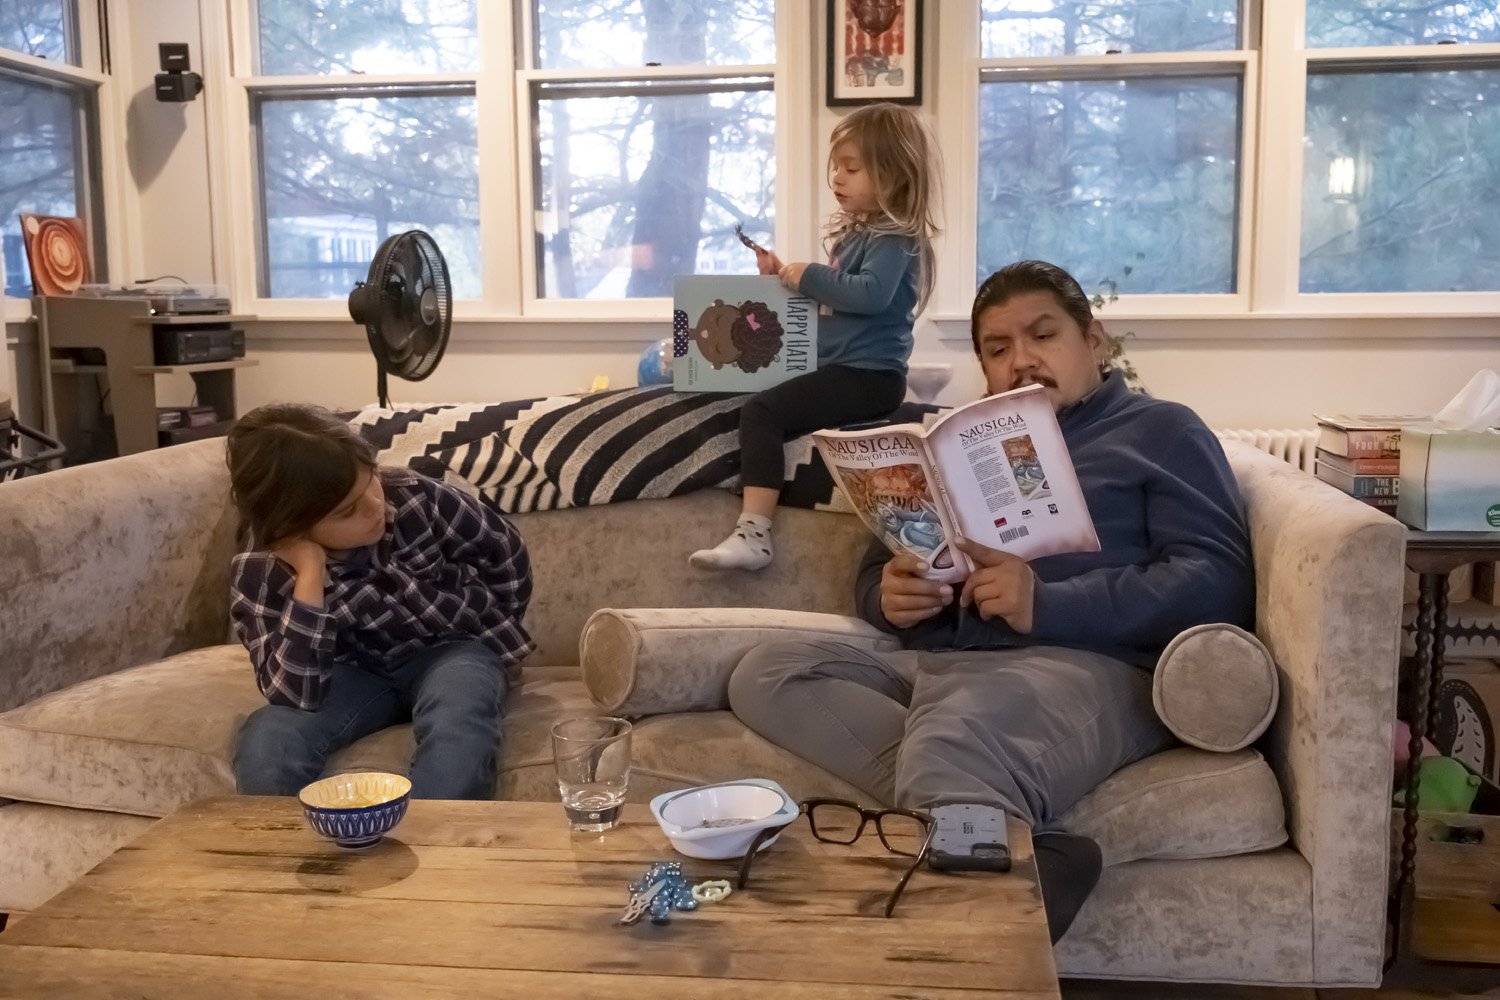 Family life on a sofa, 2021